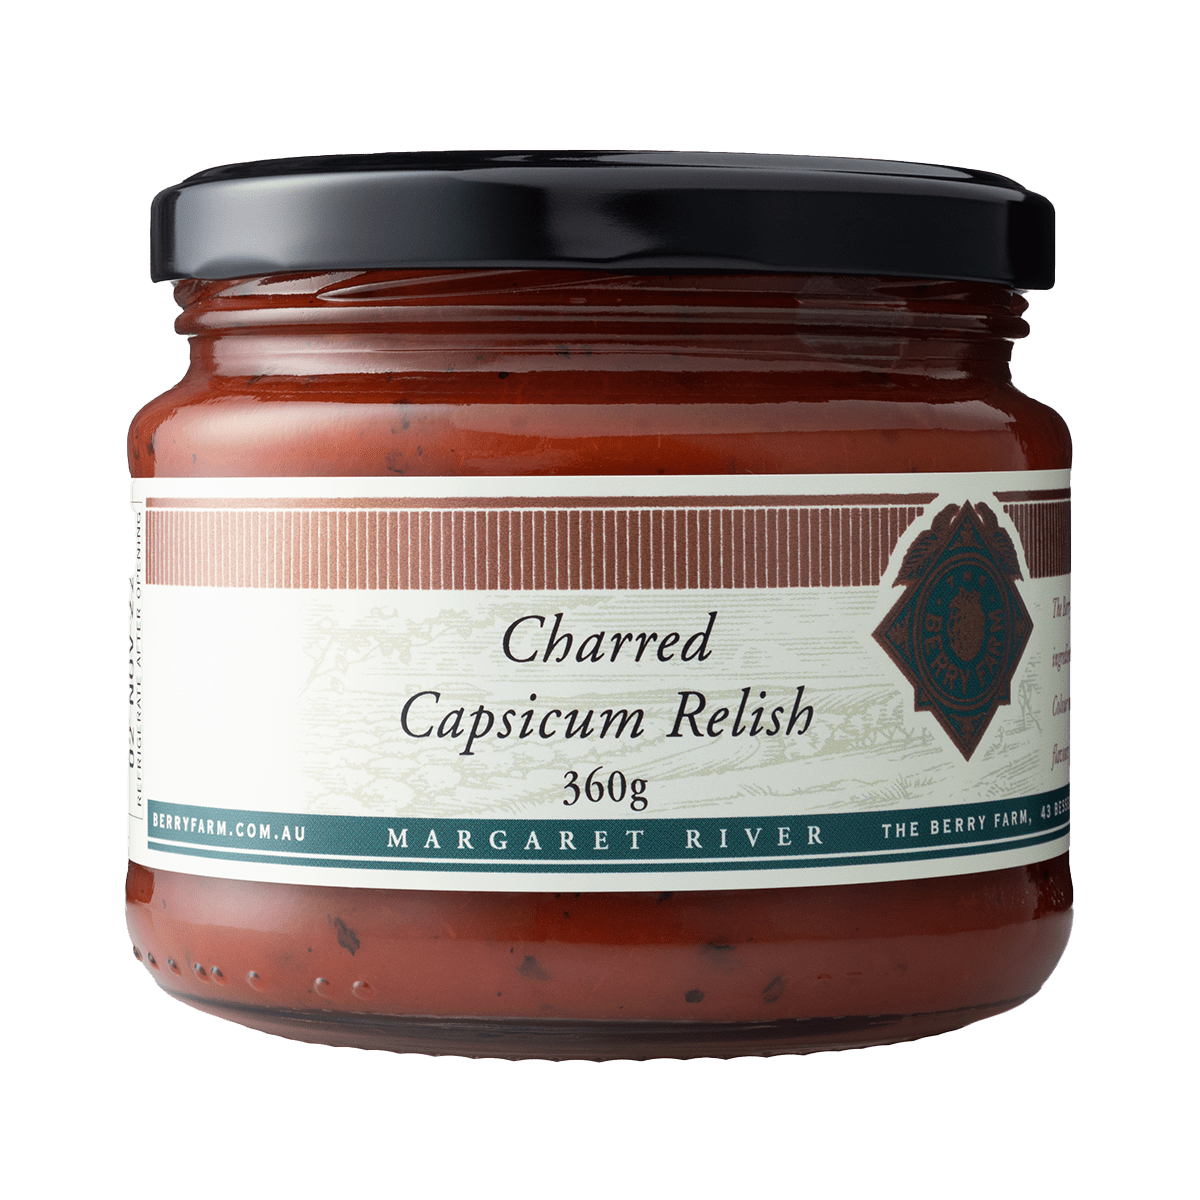 A jar of Charred Capsicum Relish